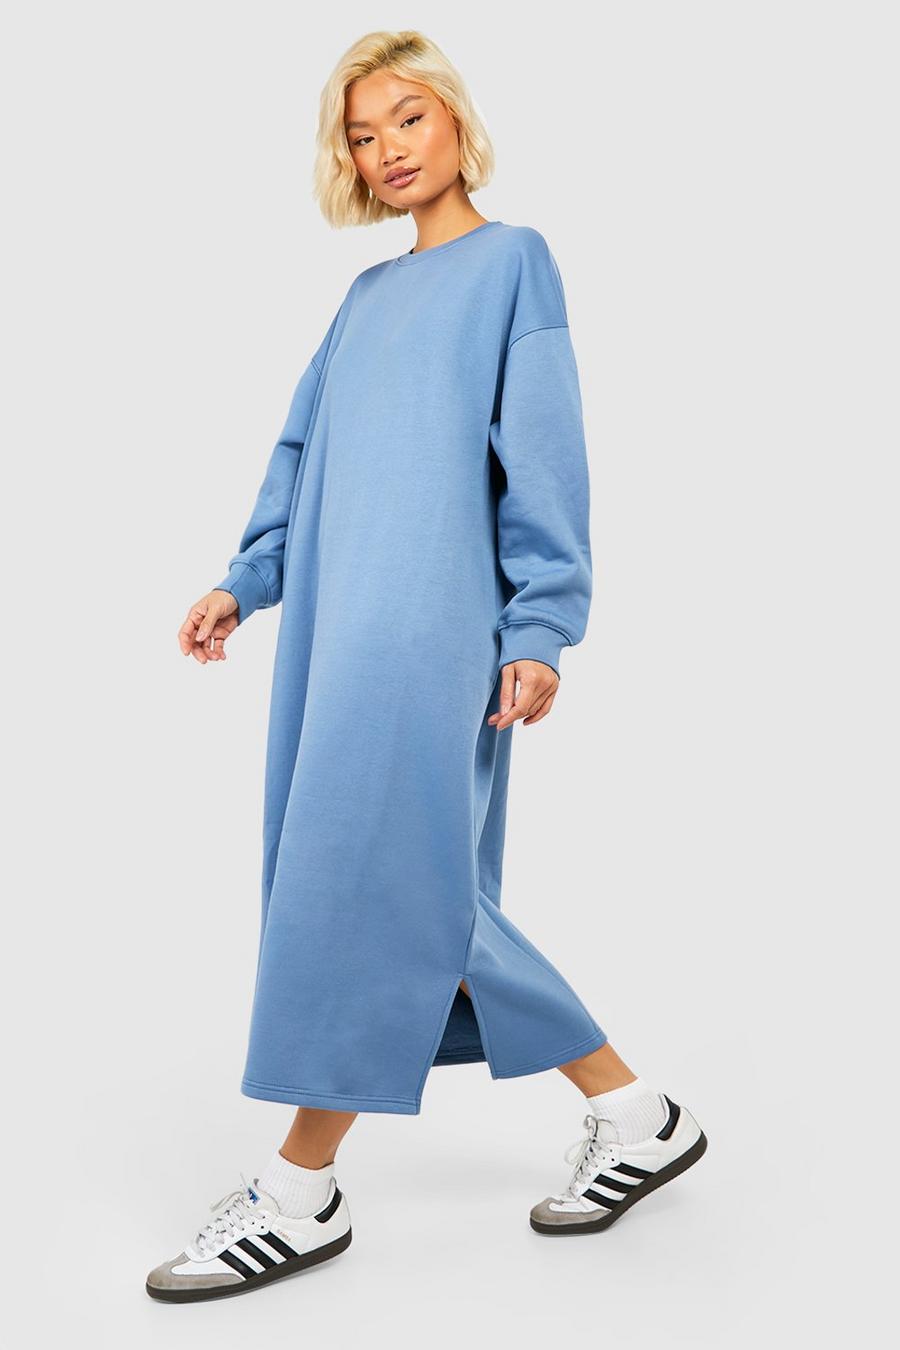 Vestito longuette oversize in felpa, Denim-blue